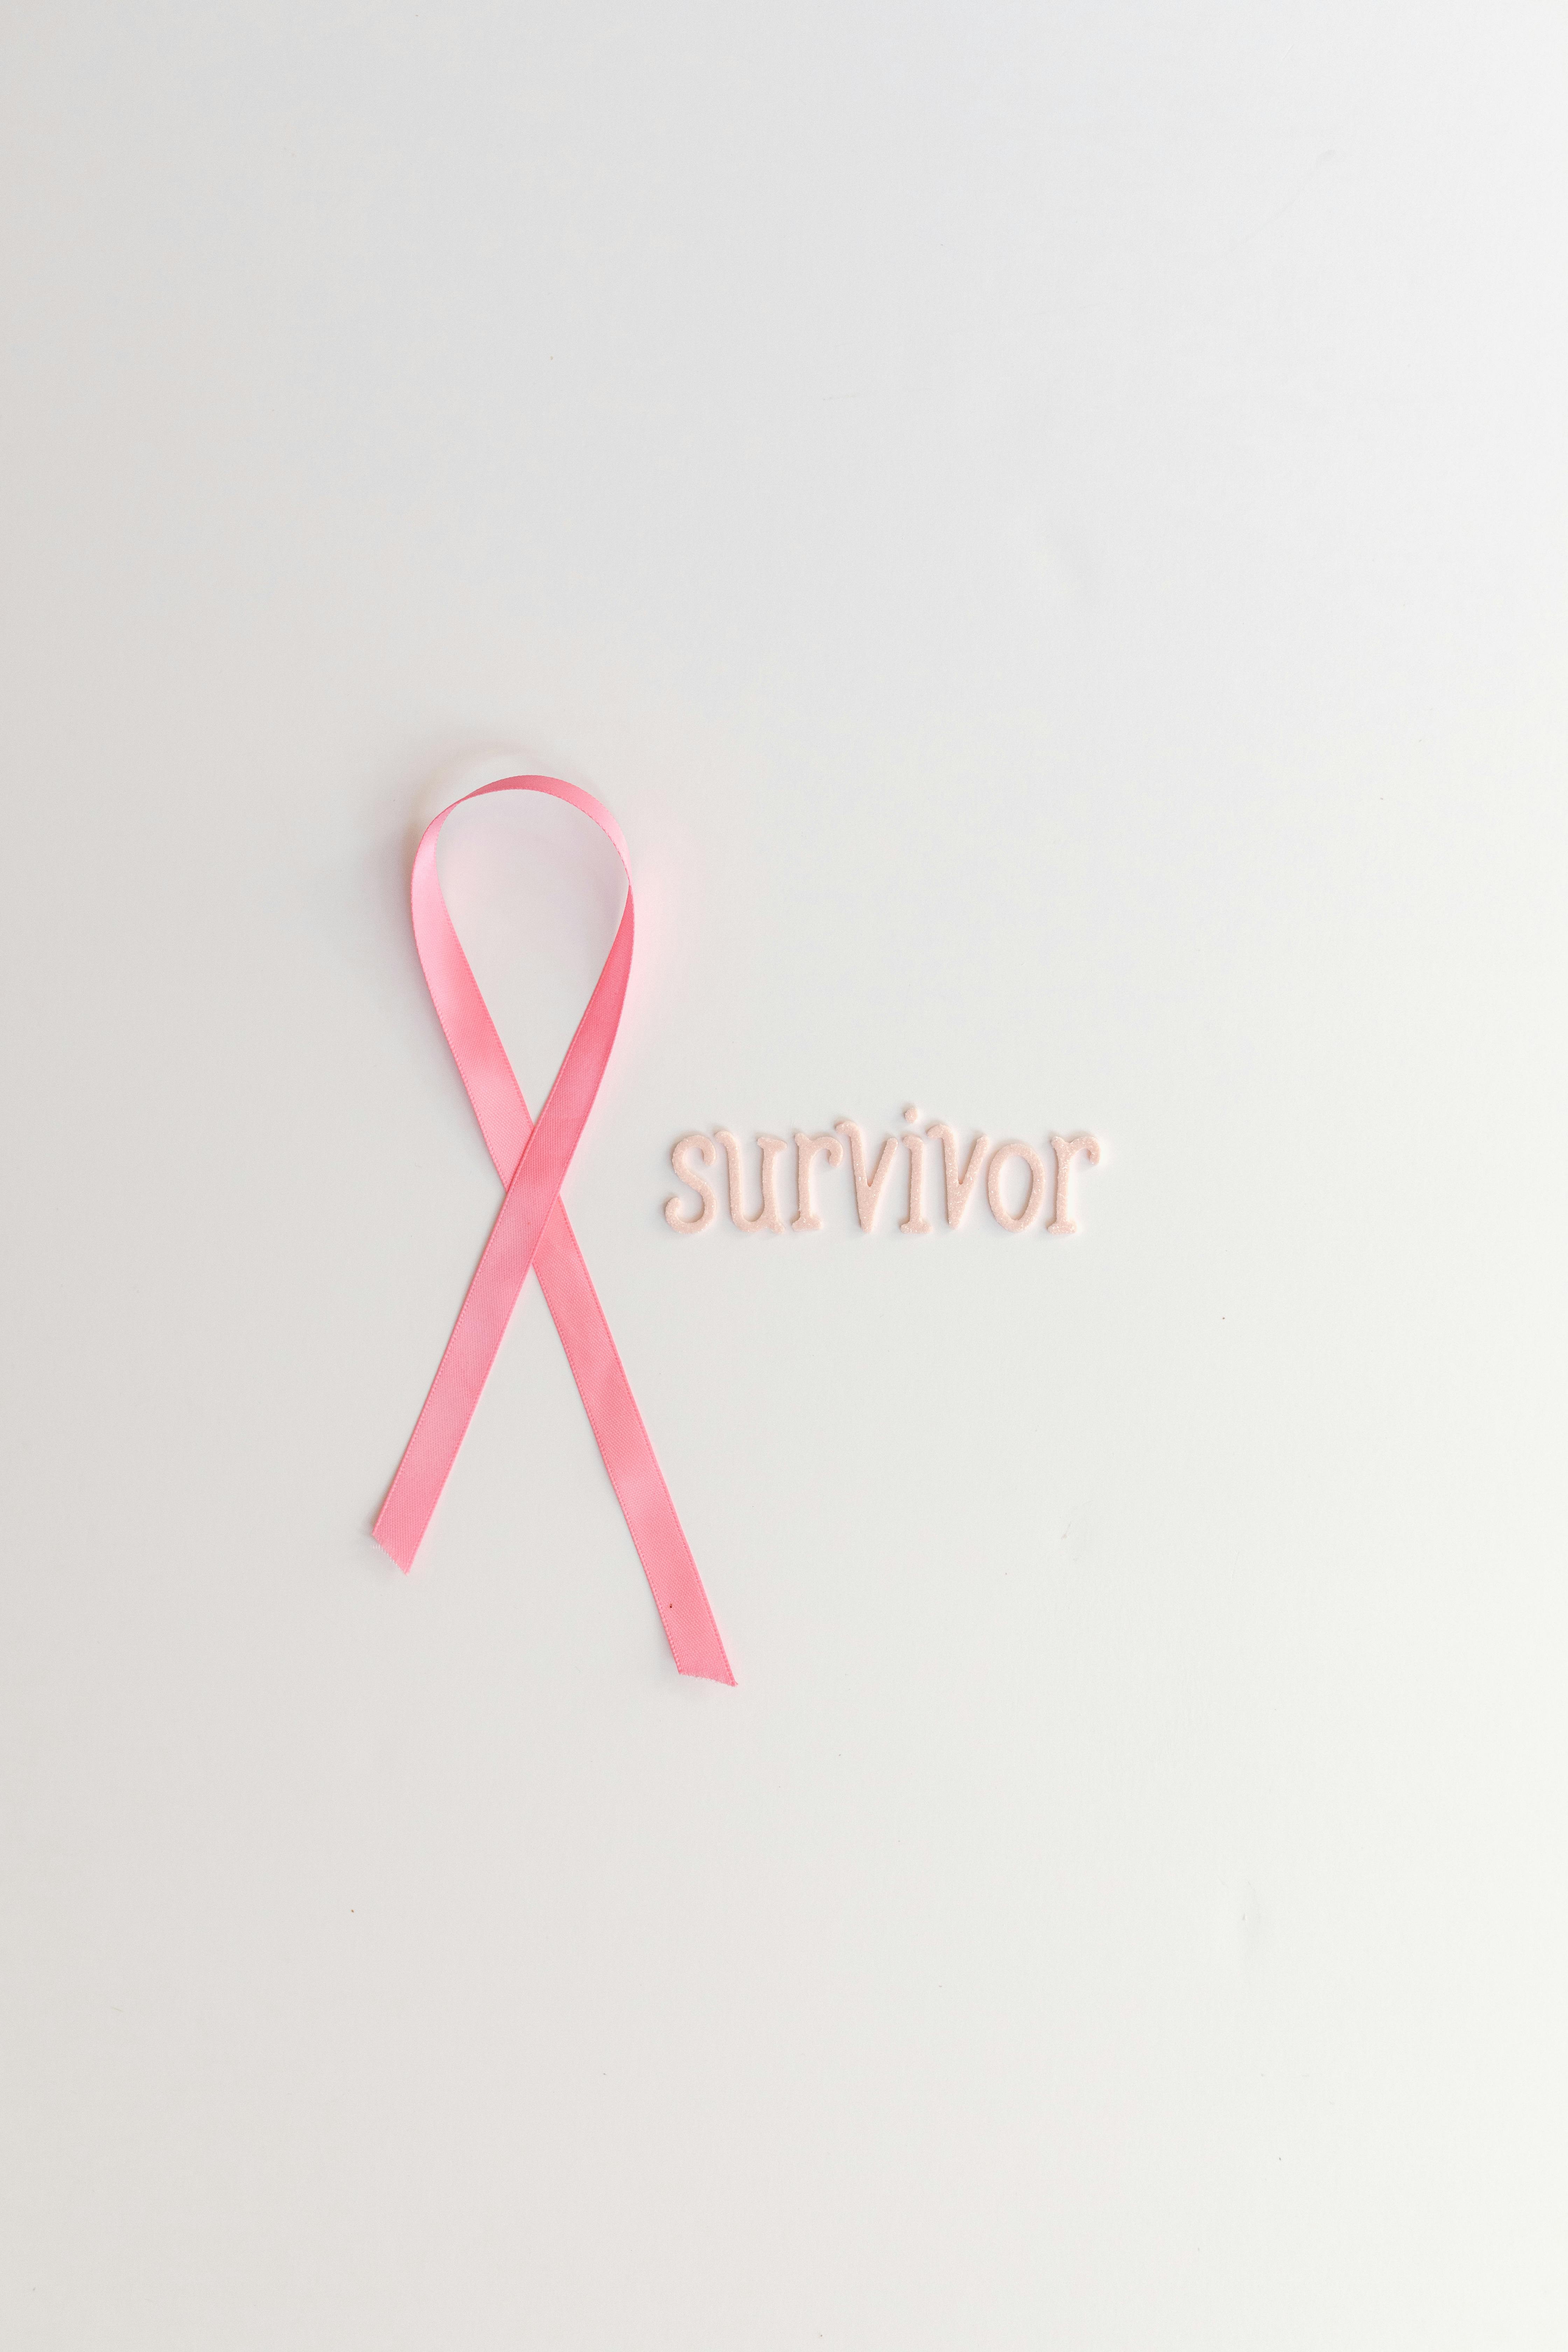 Breast Cancer Wallpaper Images  Free Download on Freepik